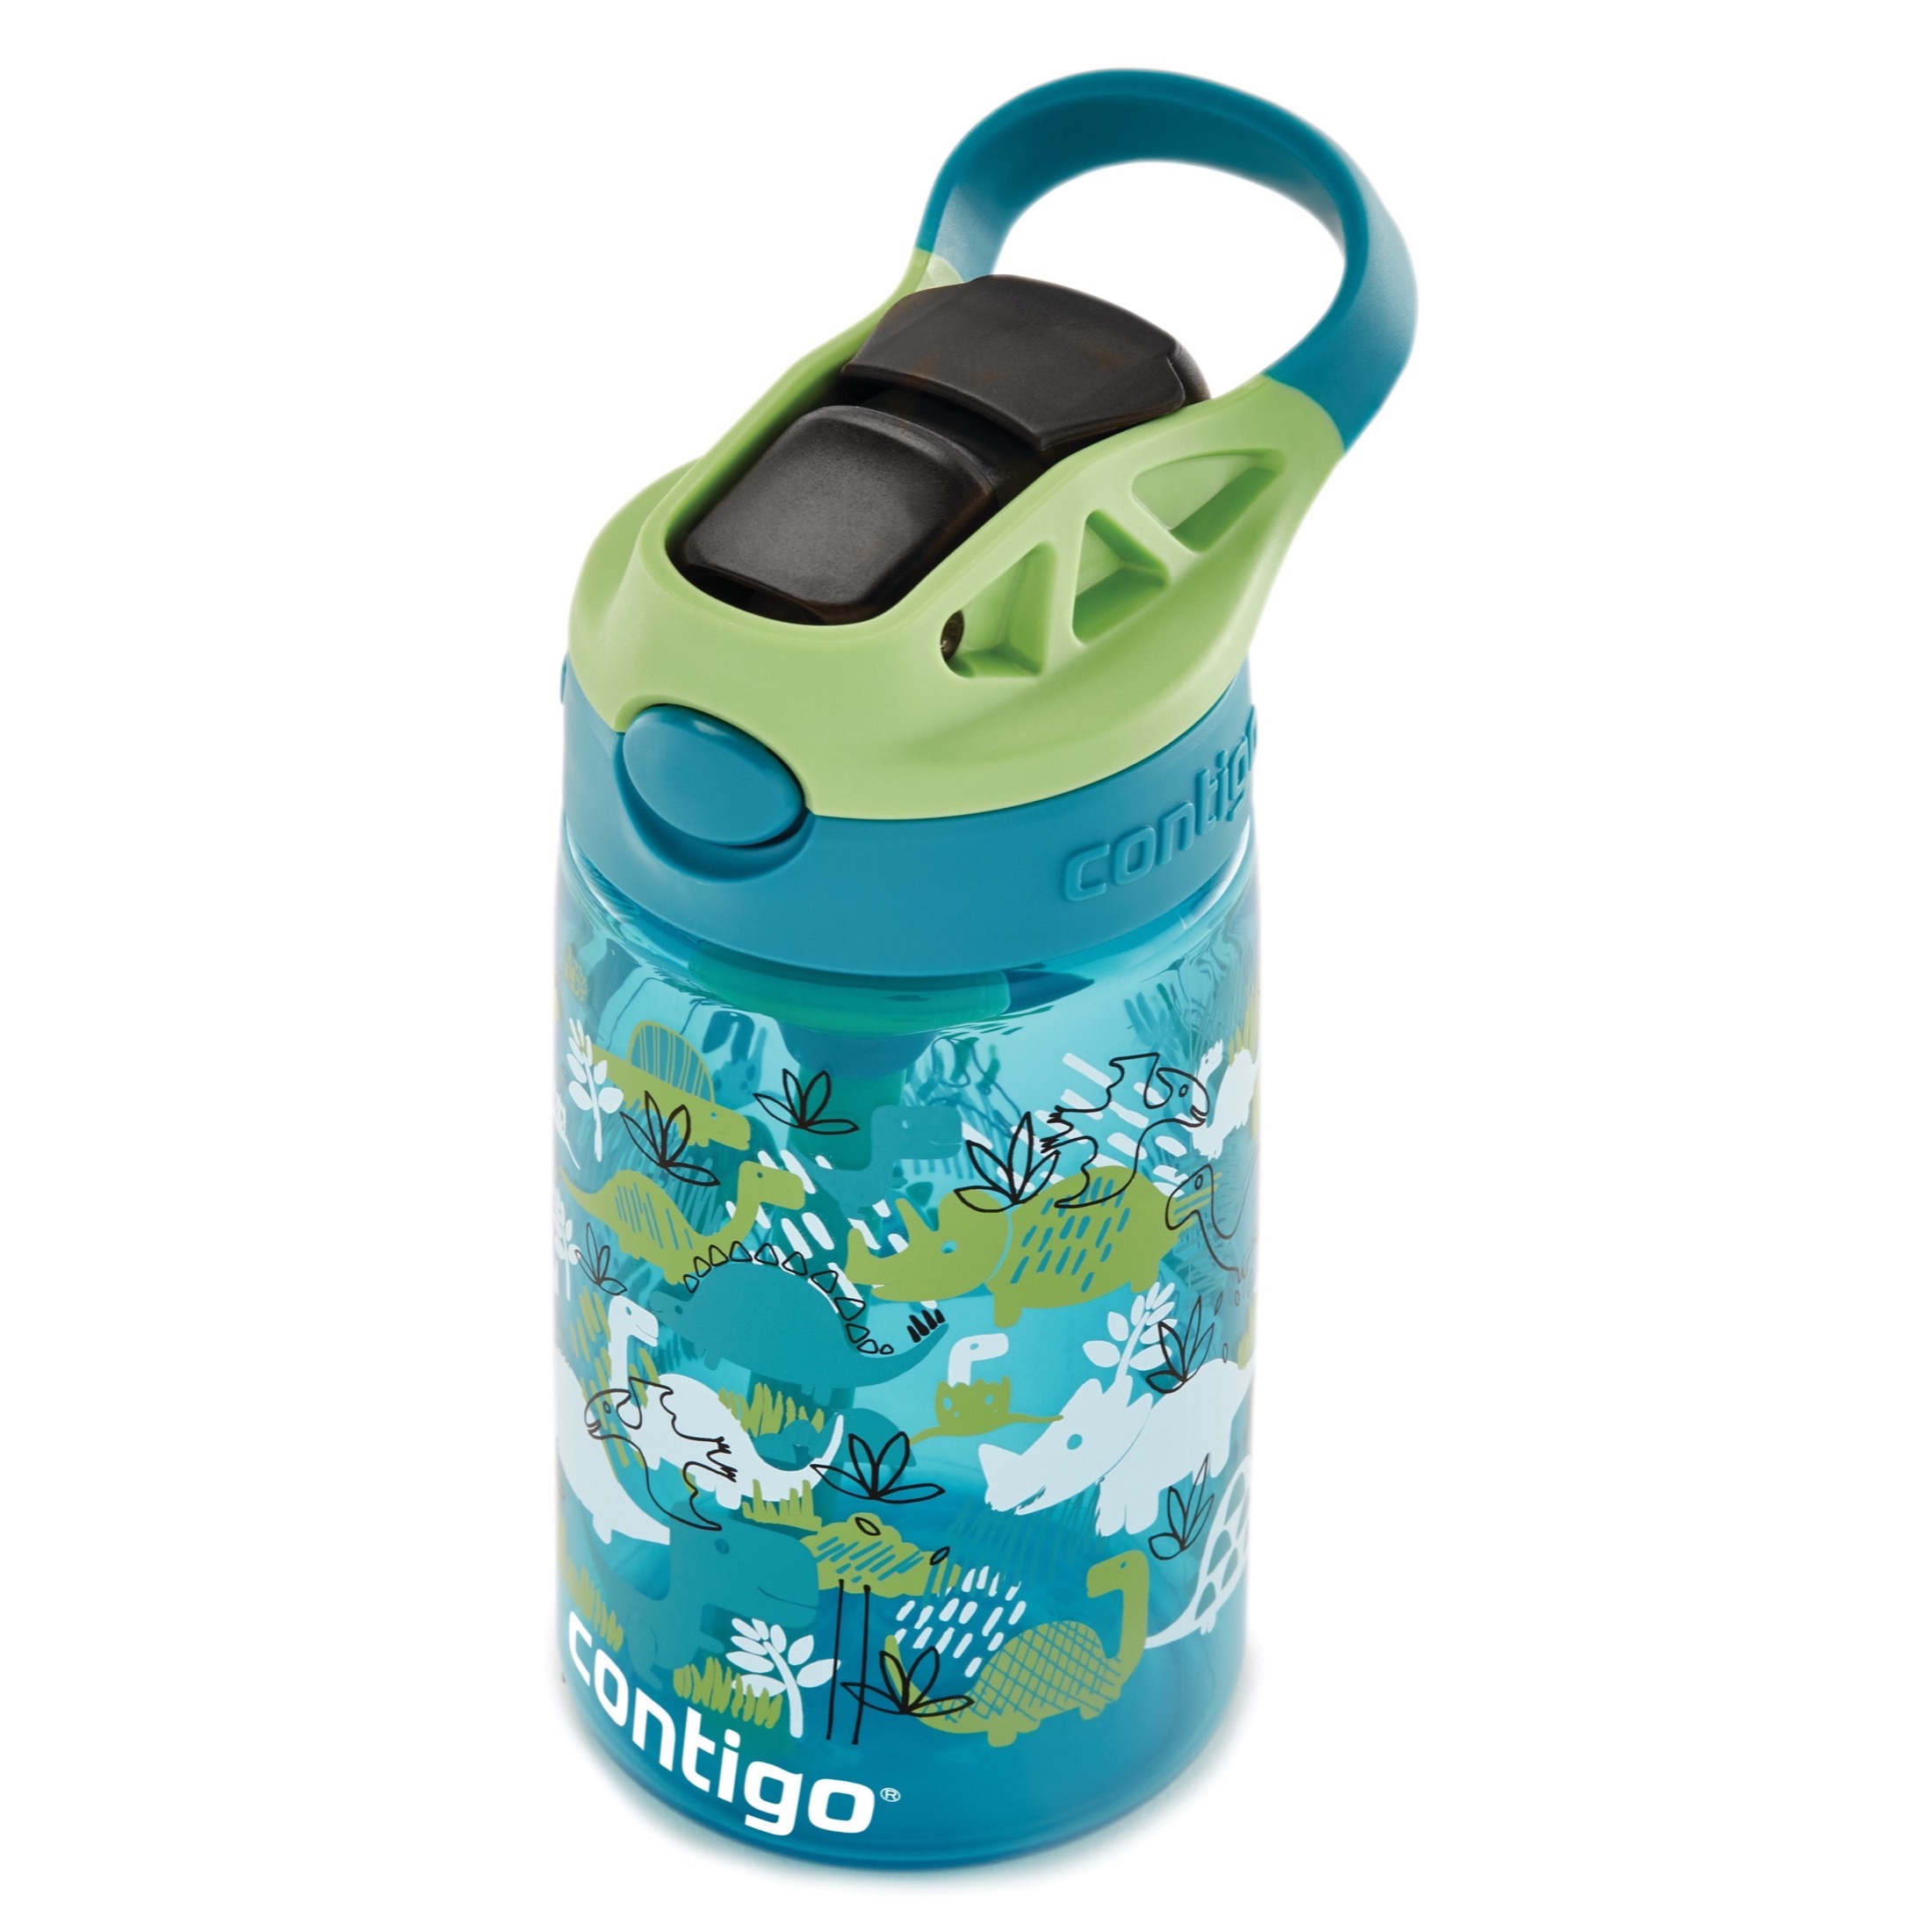 Contigo Kids Water Bottle with Autospout Straw Green & Blue, 14 fl oz. - image 6 of 8